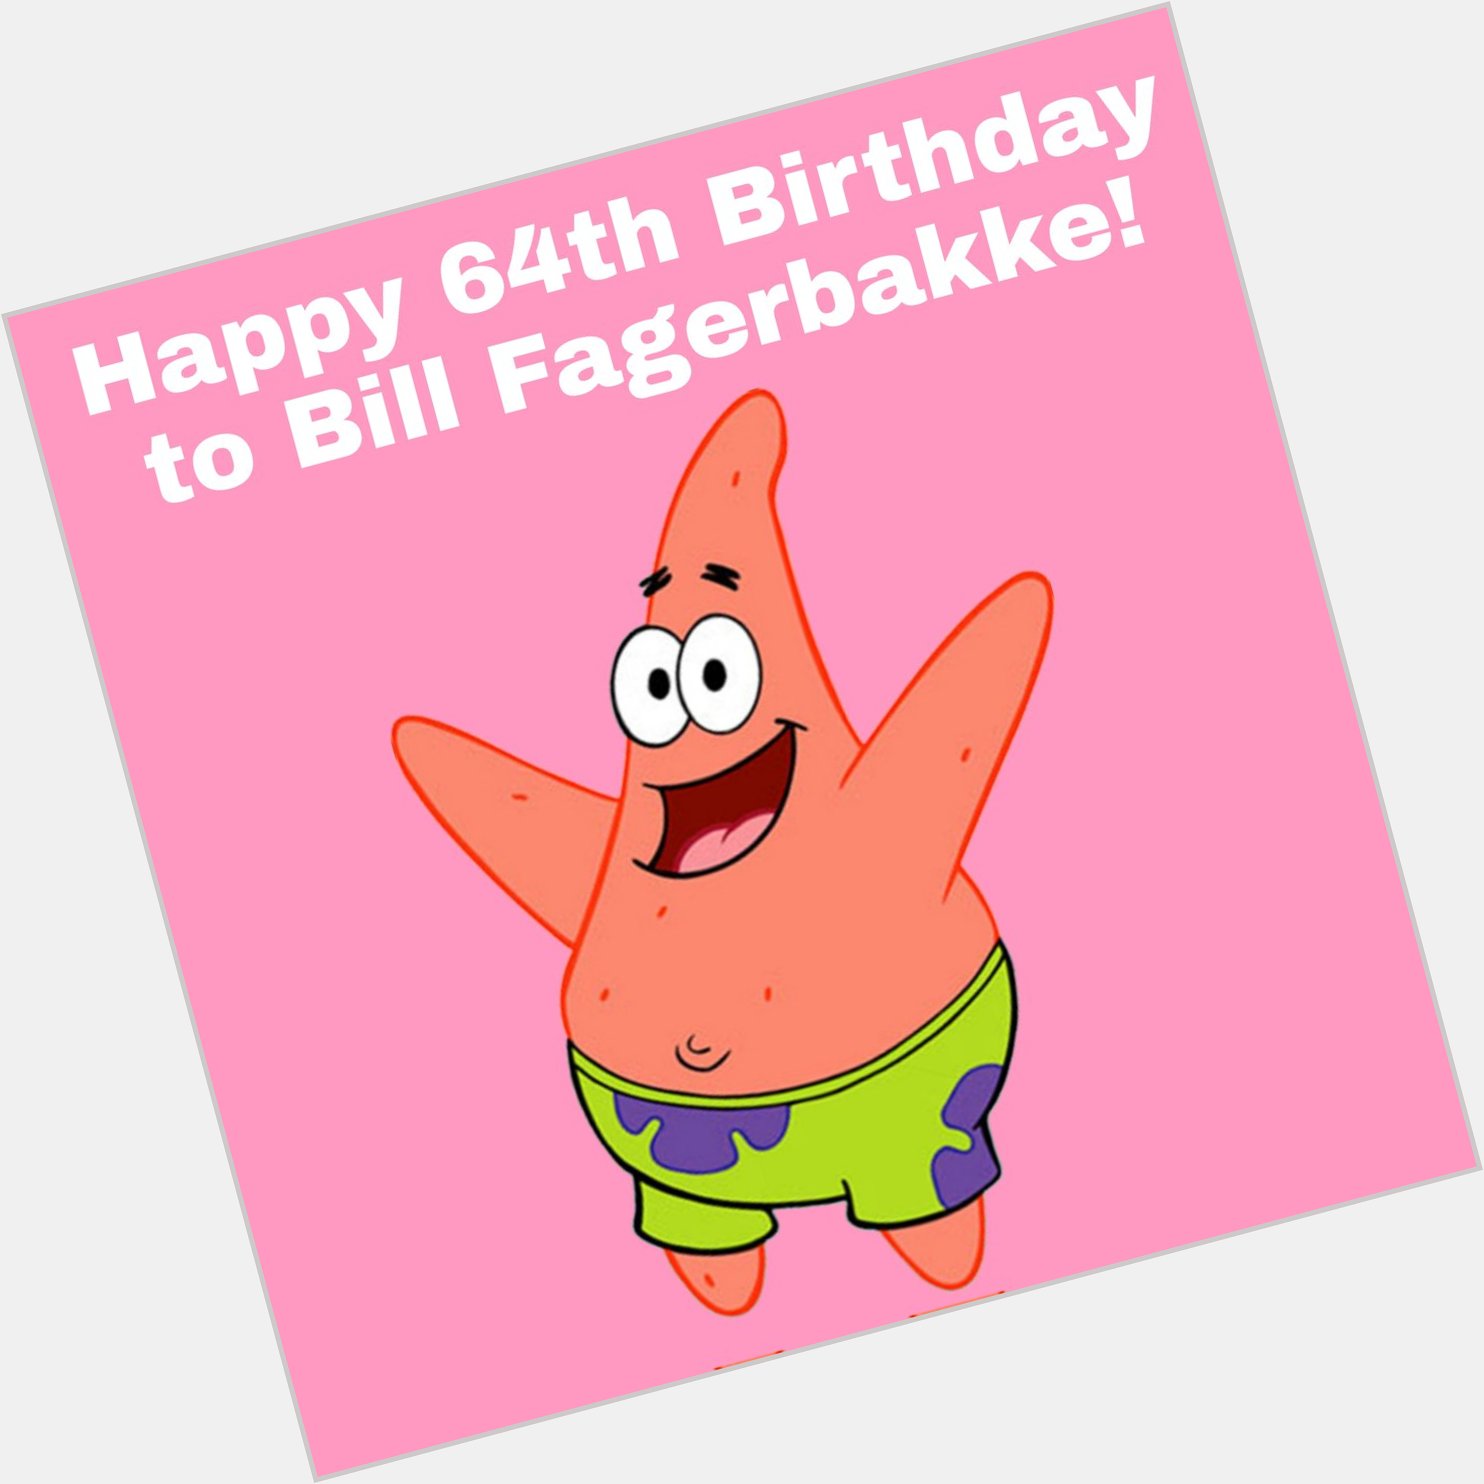 Happy 64th Birthday to Bill Fagerbakke! The voice From Patrick Star in SpongeBob SquarePants. 